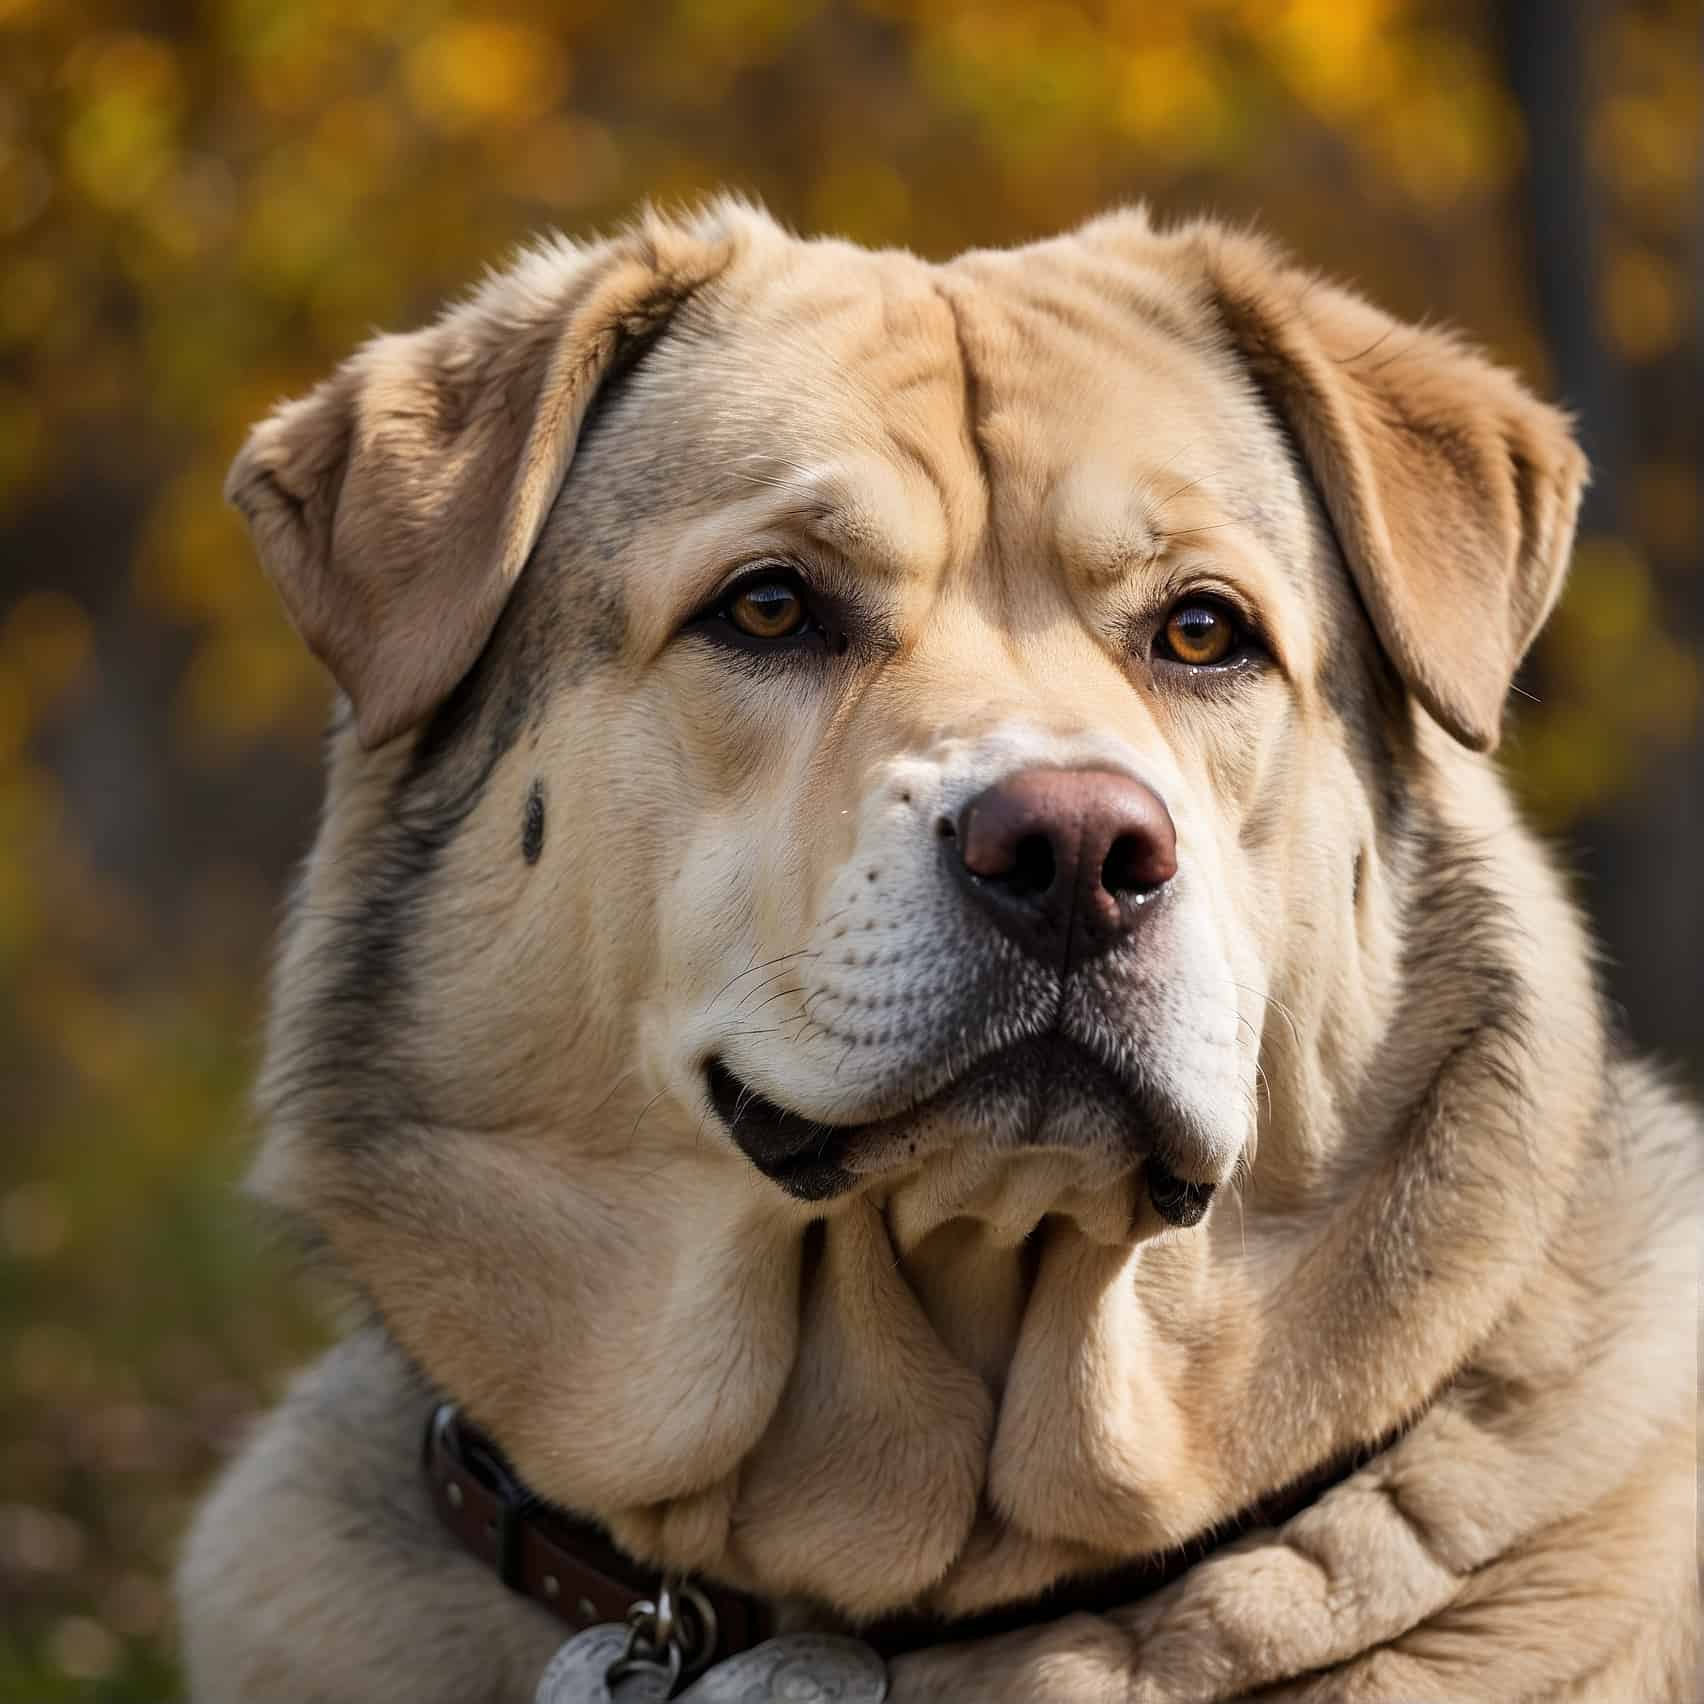 Central Asian Mastiff (Central Asian Shepherd Dog) headshot portrait